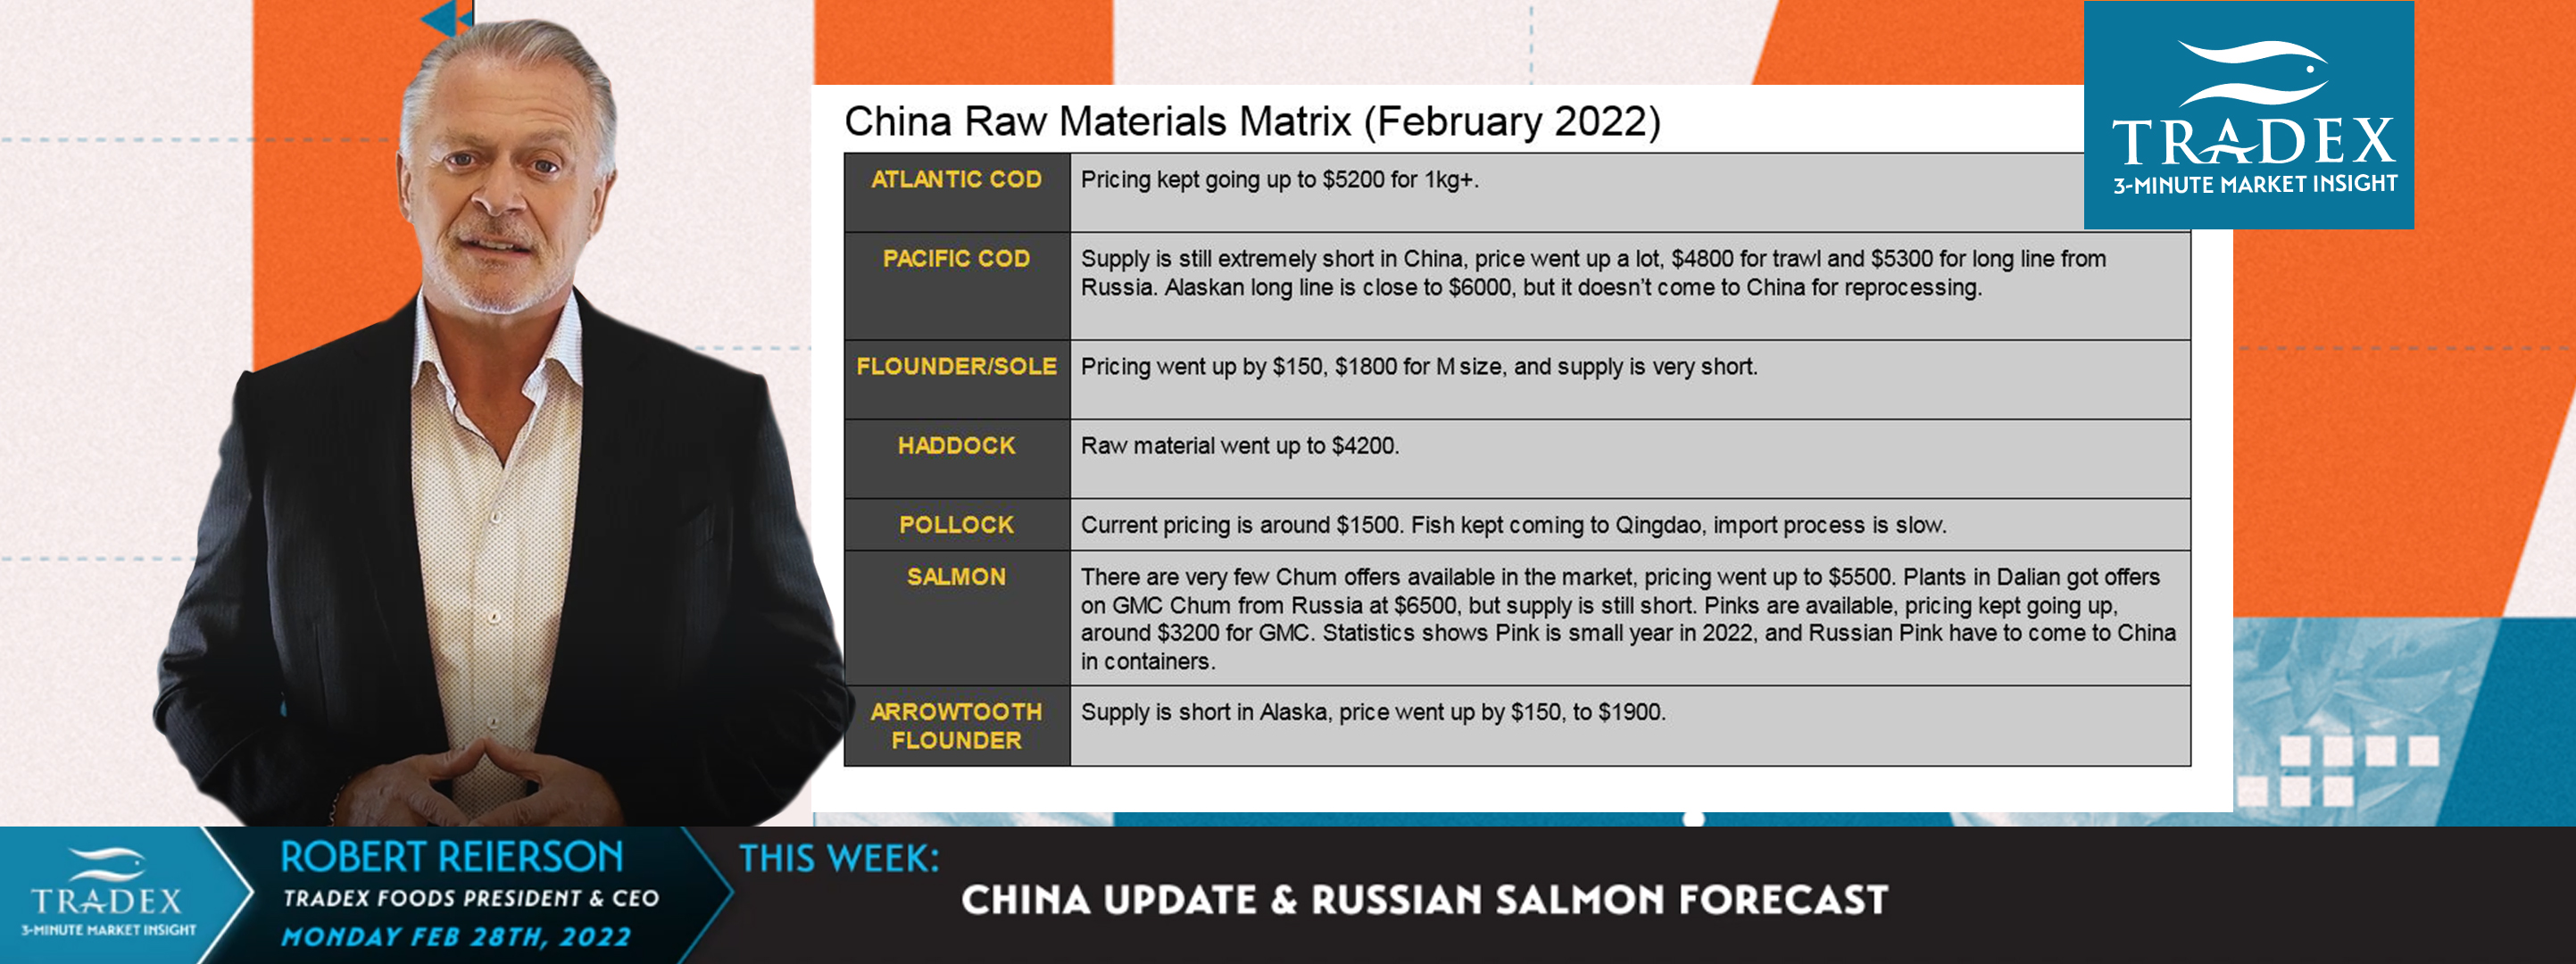 China Update & Russian Salmon Forecast